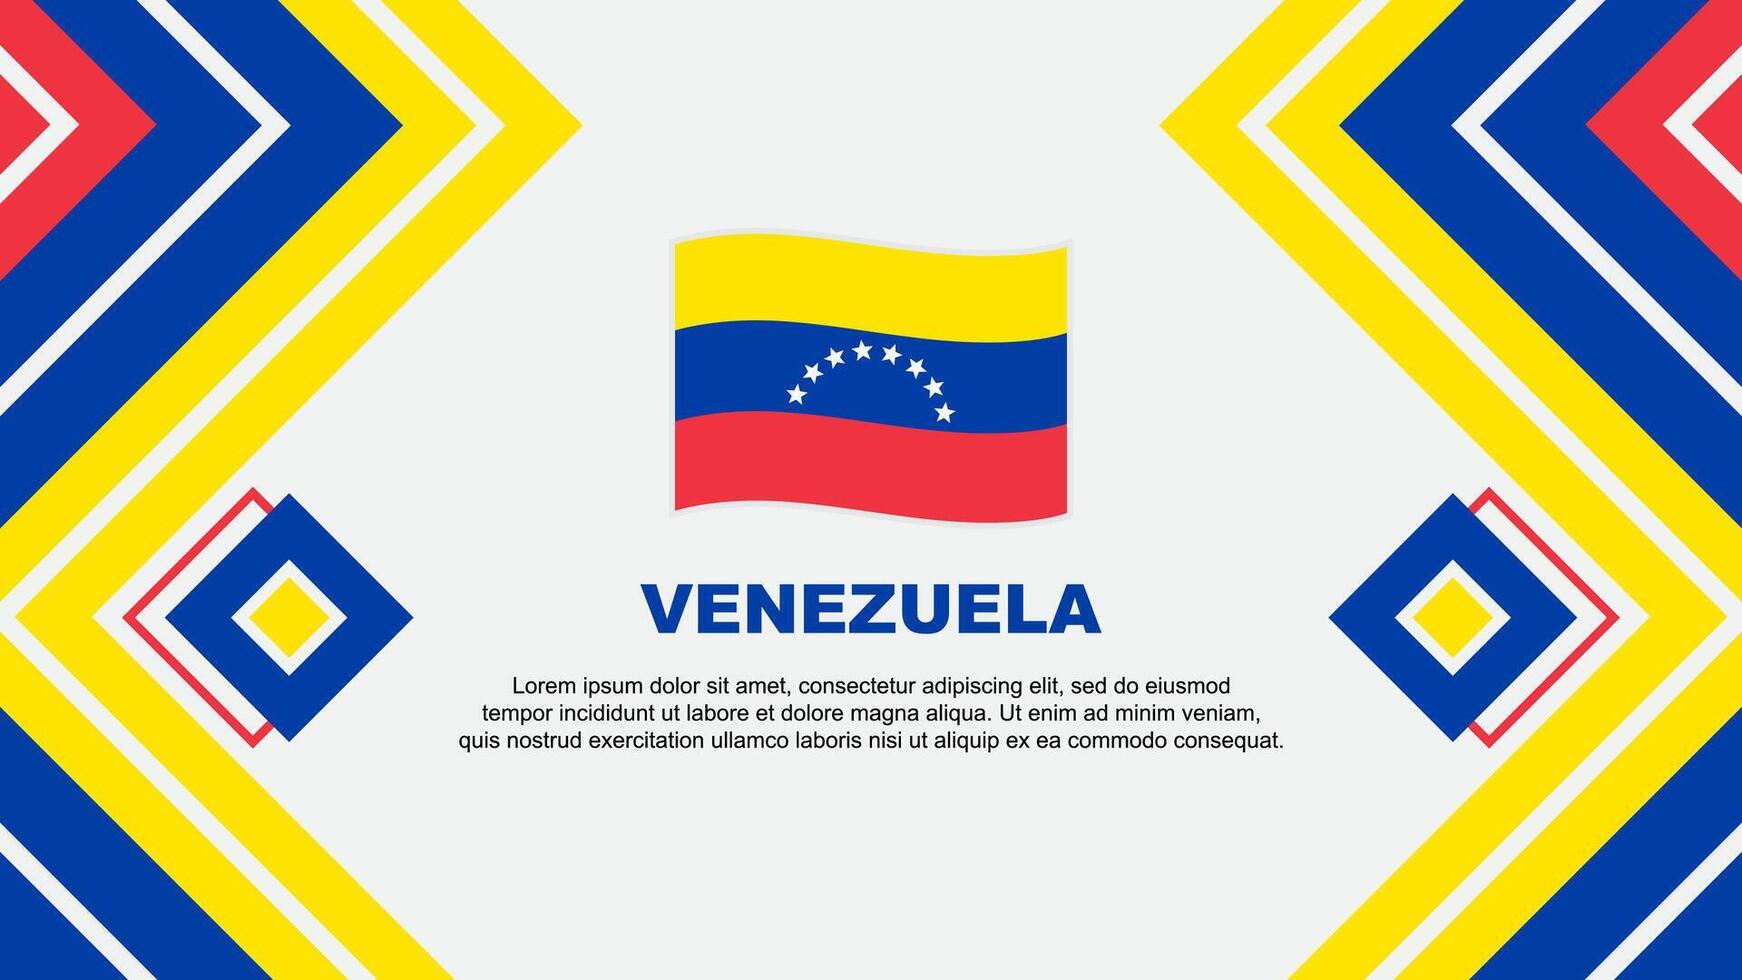 Venezuela Flag Abstract Background Design Template. Venezuela Independence Day Banner Wallpaper Vector Illustration. Venezuela Design